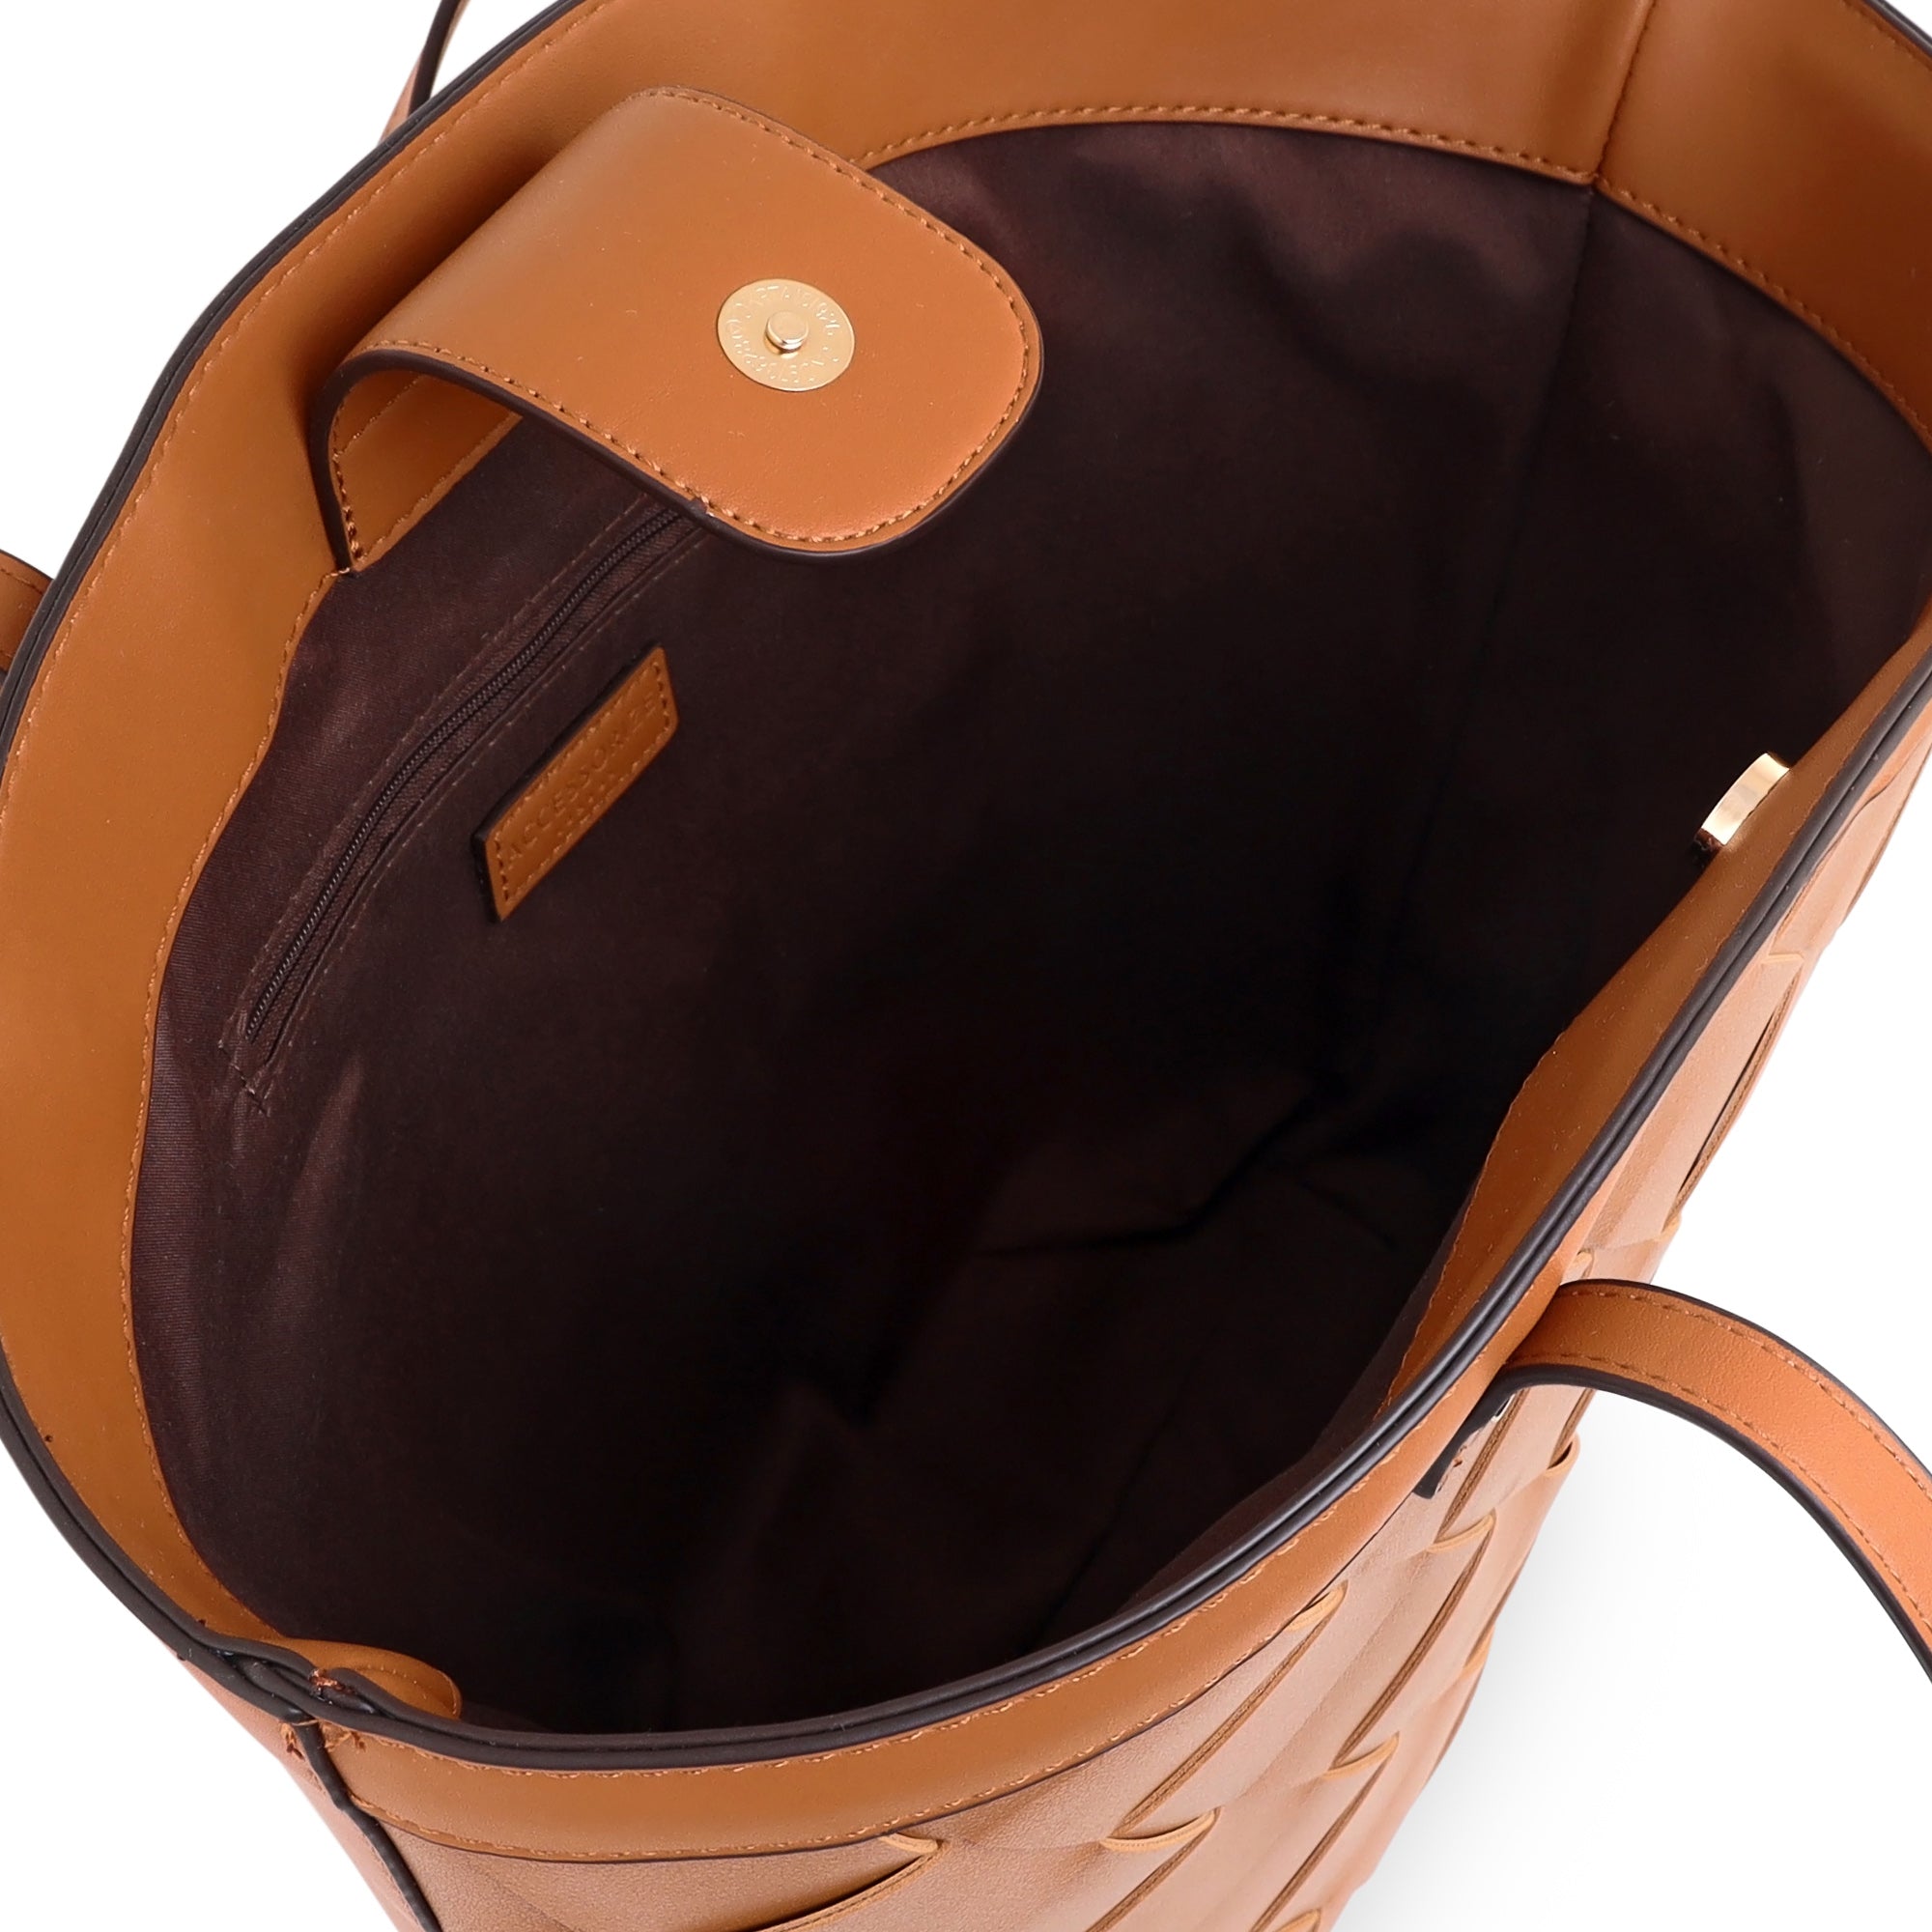 Accessorize London Women's Faux Leather Tan Cross-Weave tote Bag